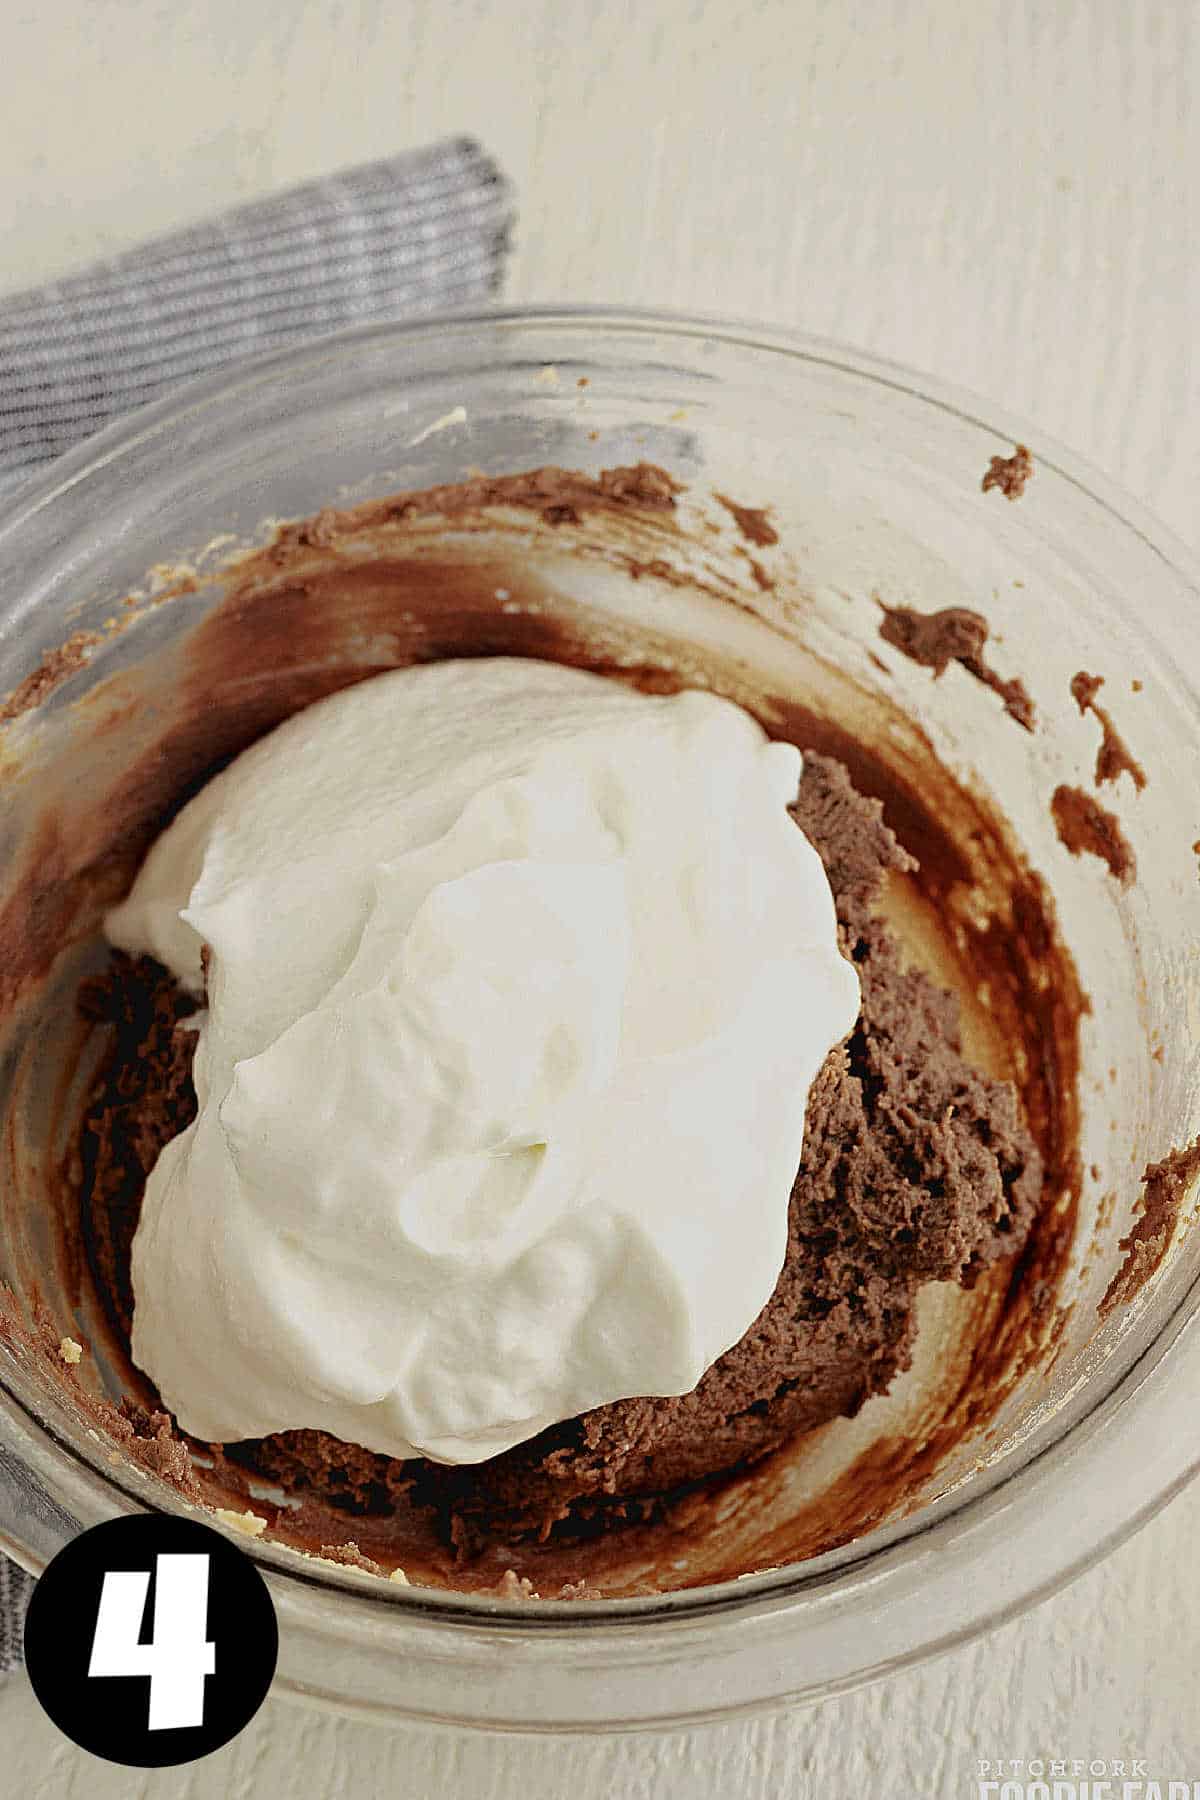 Fluffy chocolate mixture with Greek yogurt on top of it.